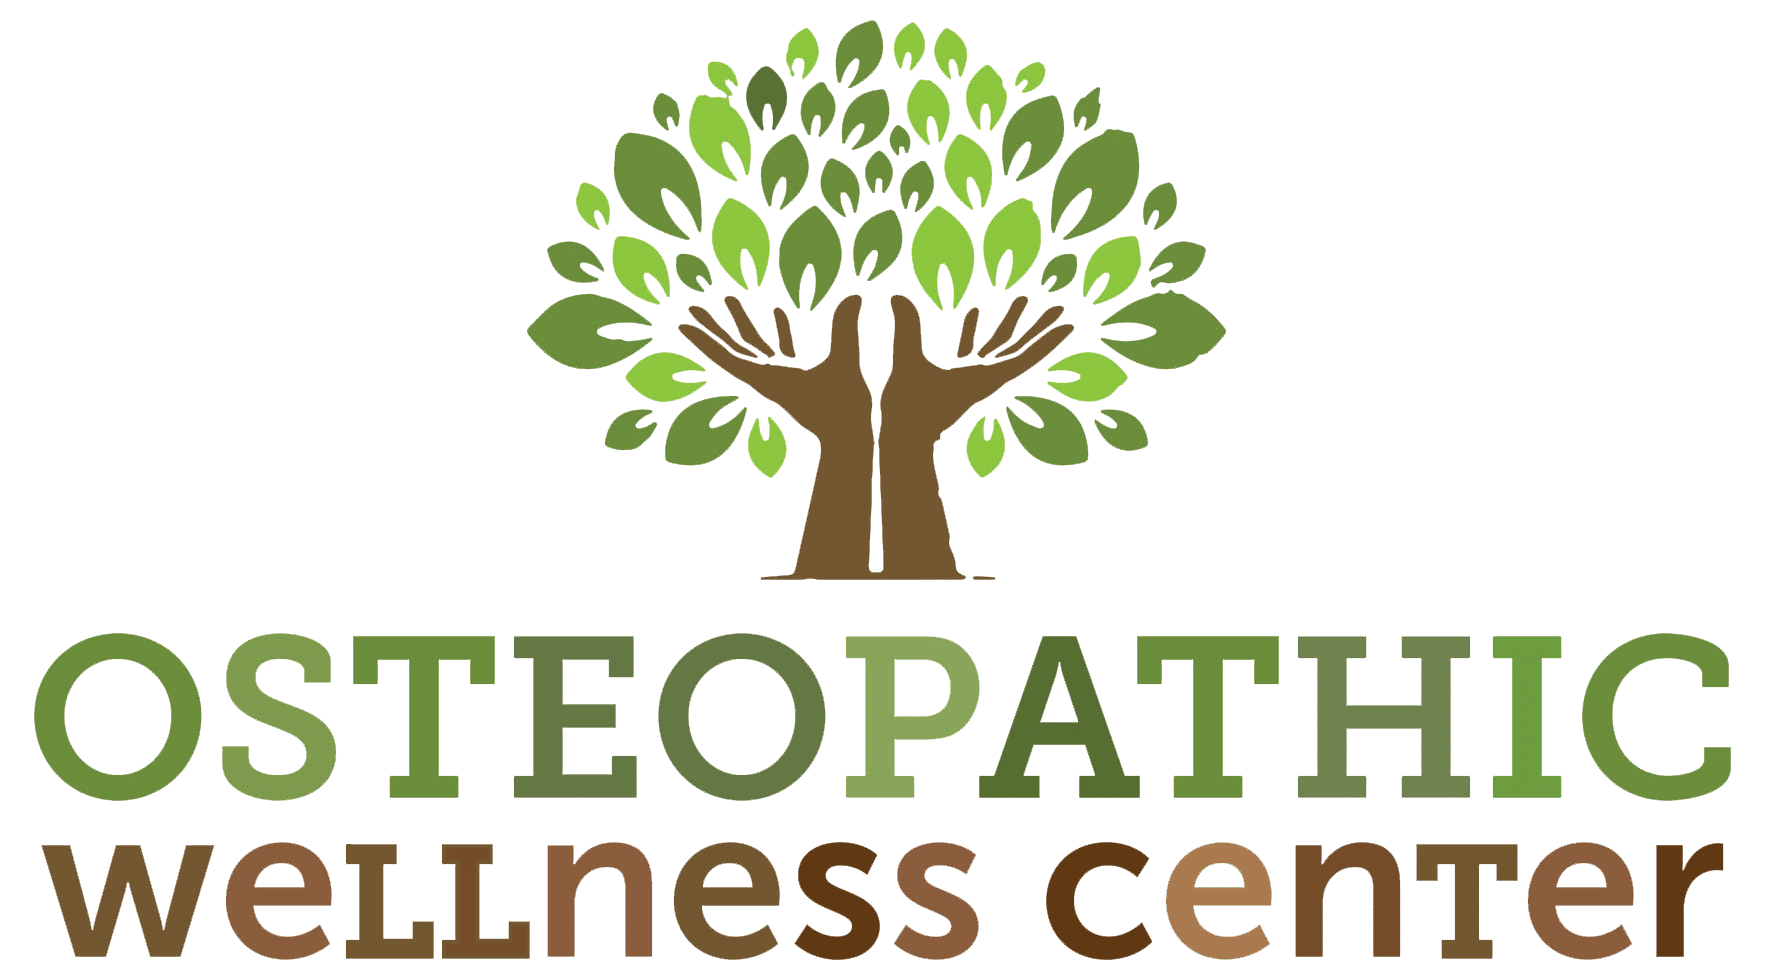 Osteopathic Wellness Center